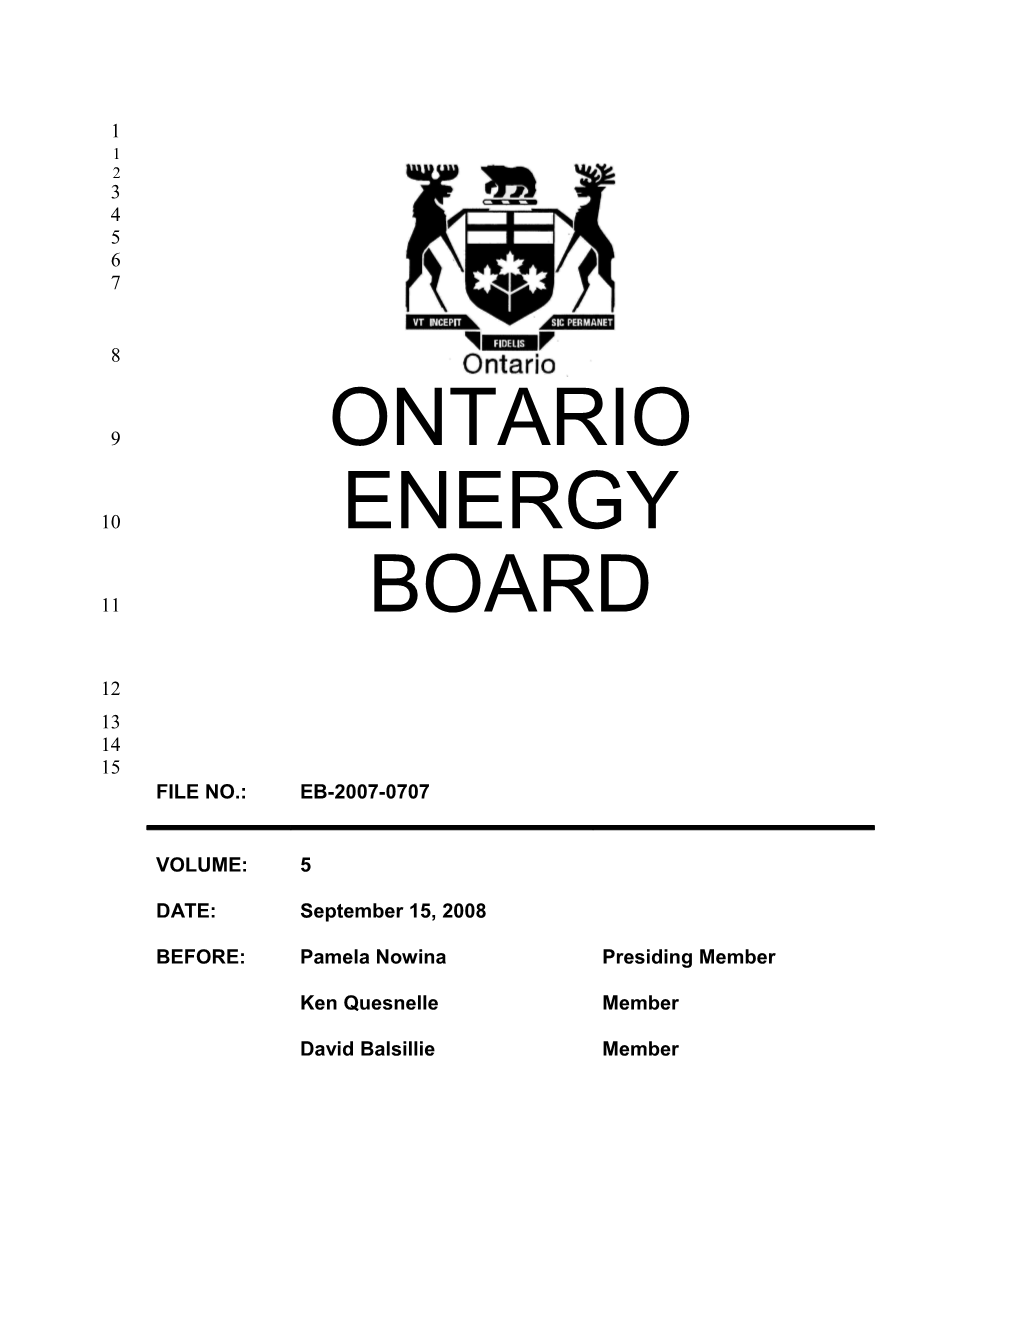 The Ontario Energy Board